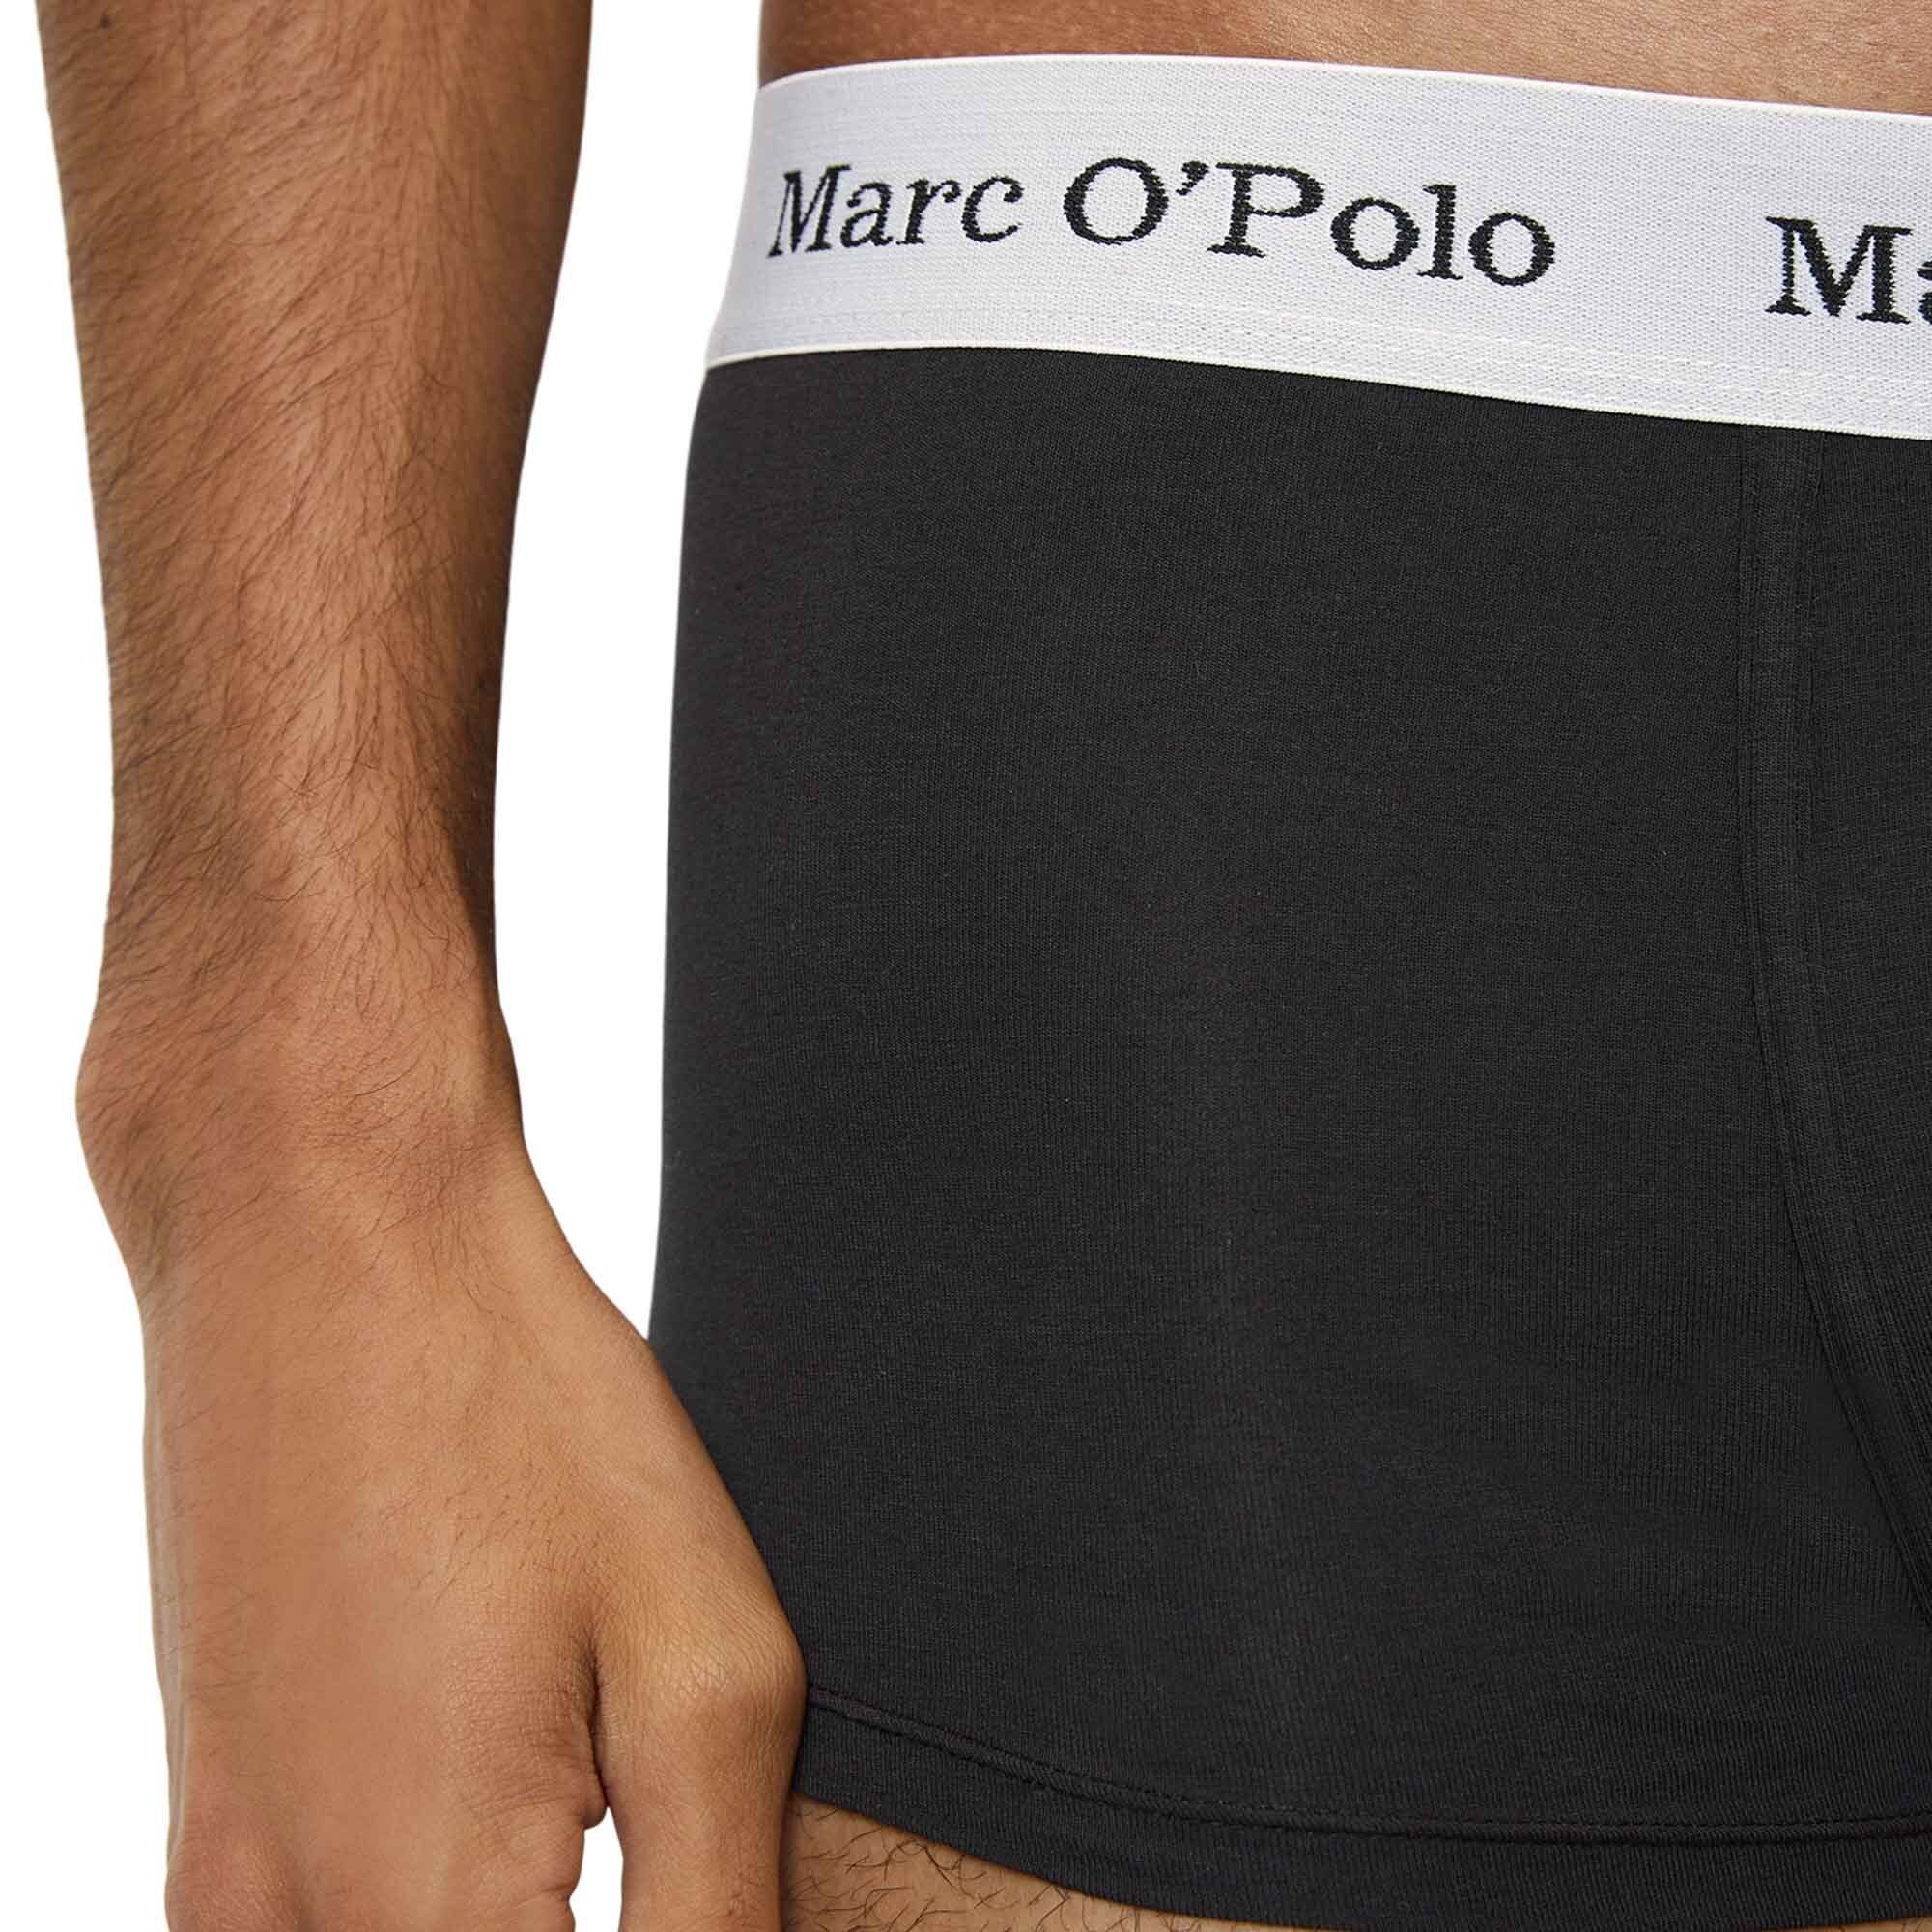 5er Trunks, Pack Boxer Organic - O'Polo Marc Shorts, Boxer Logobund,